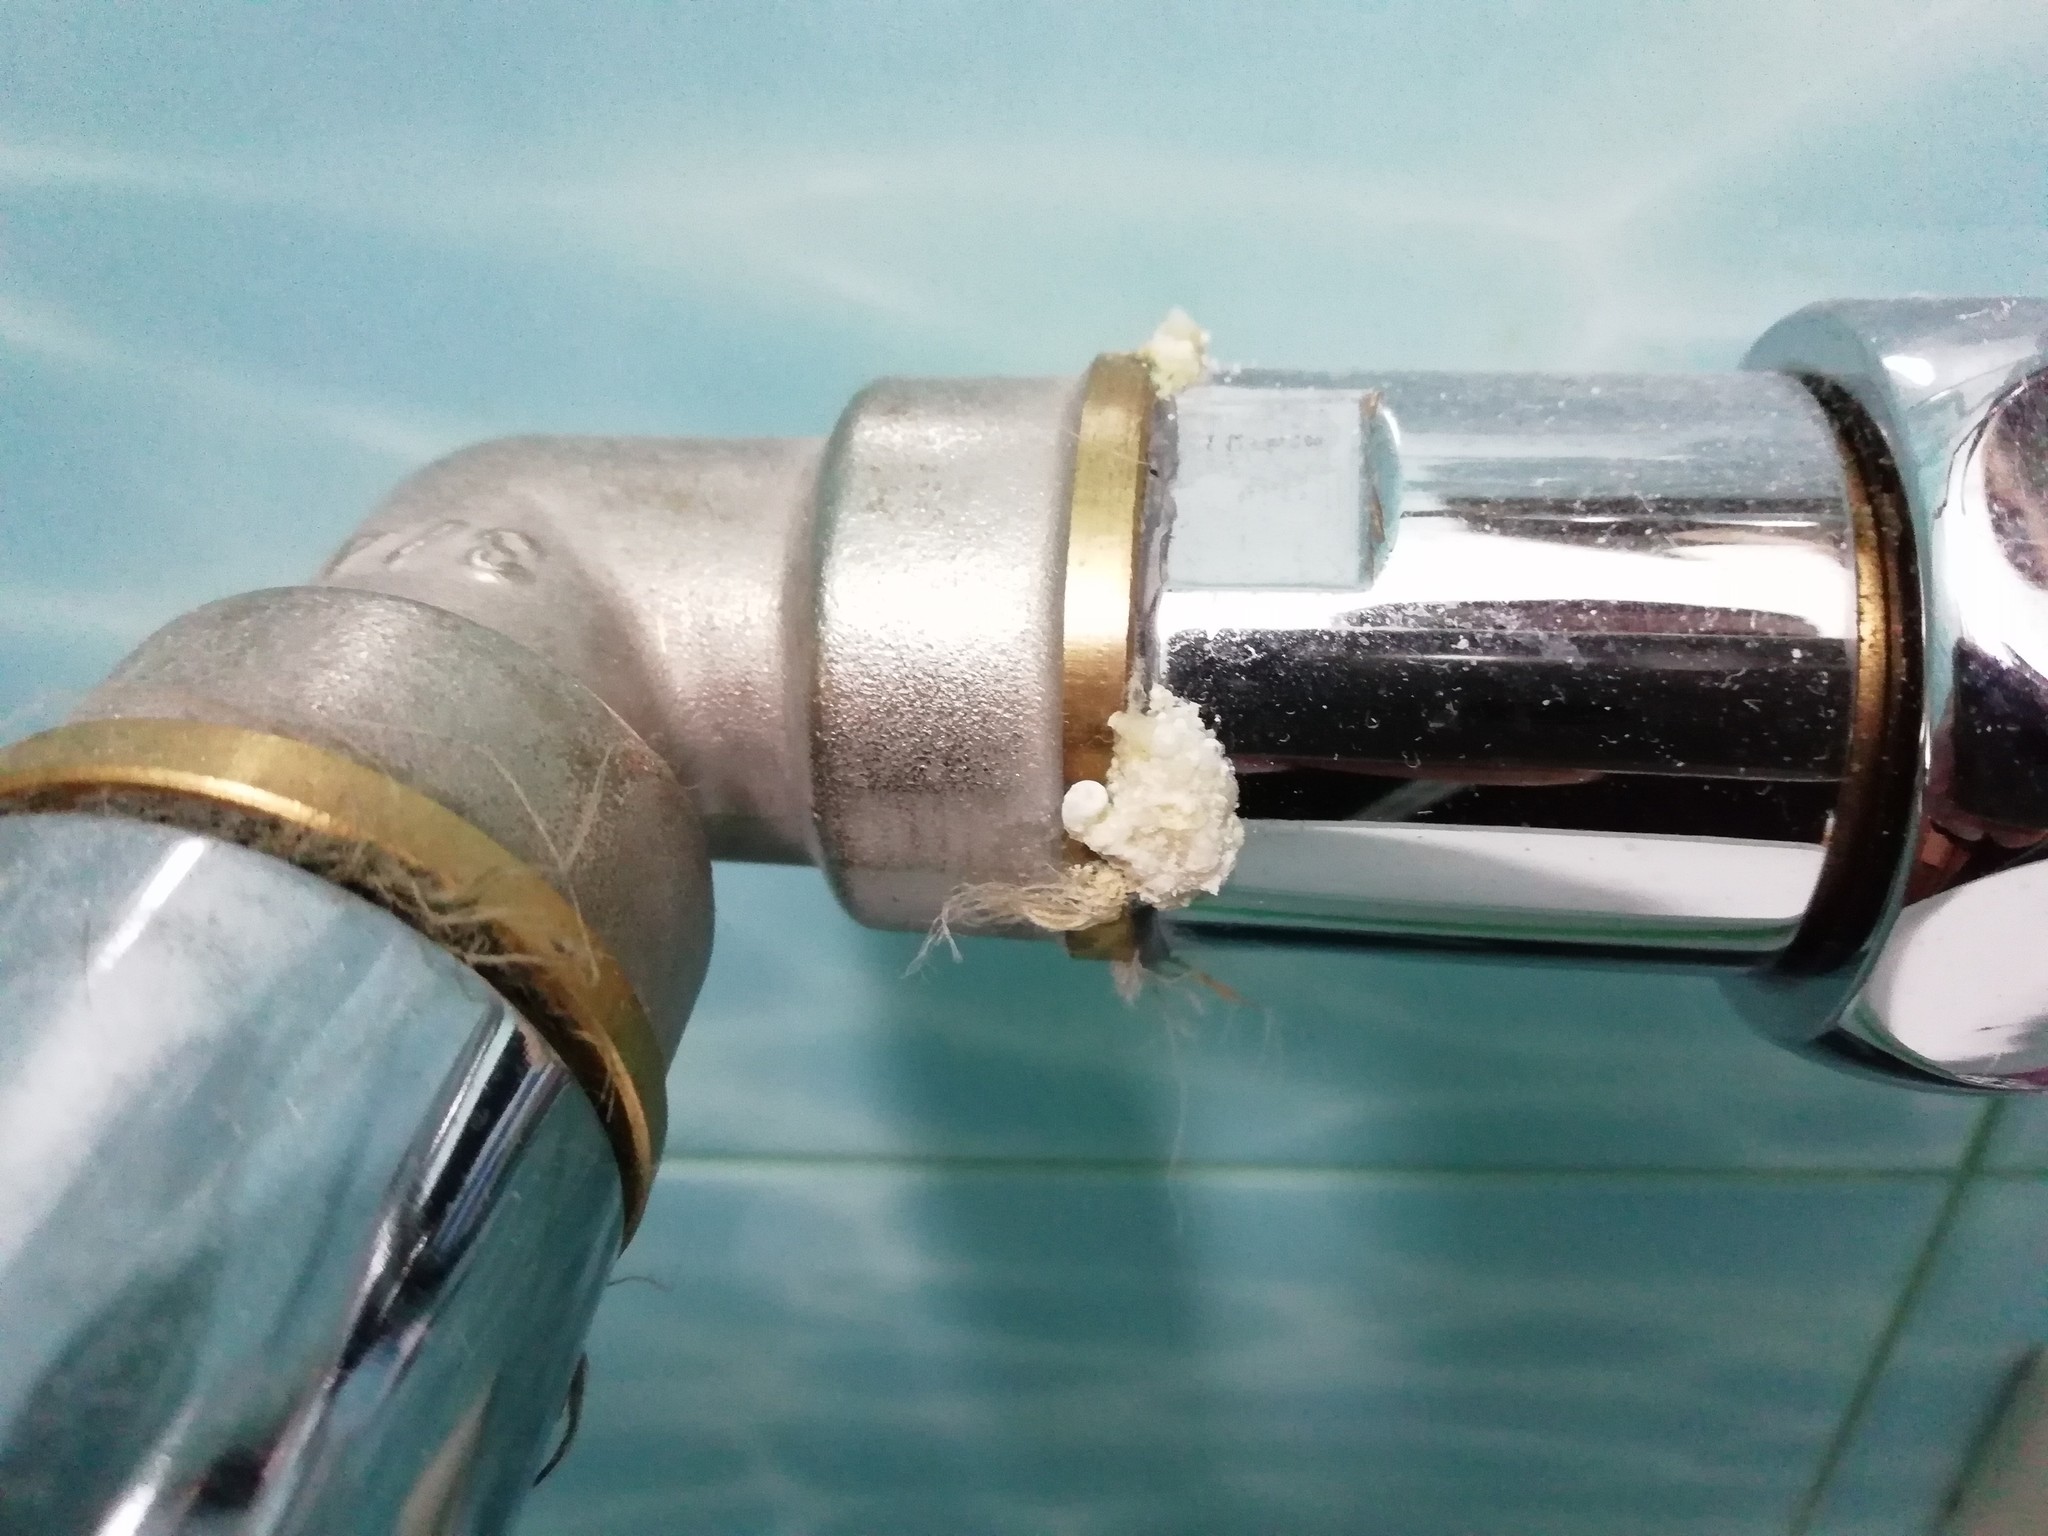 Something on the towel warmer pipe (WARNING: nasty photo) - Plumbing repair, Plumbing